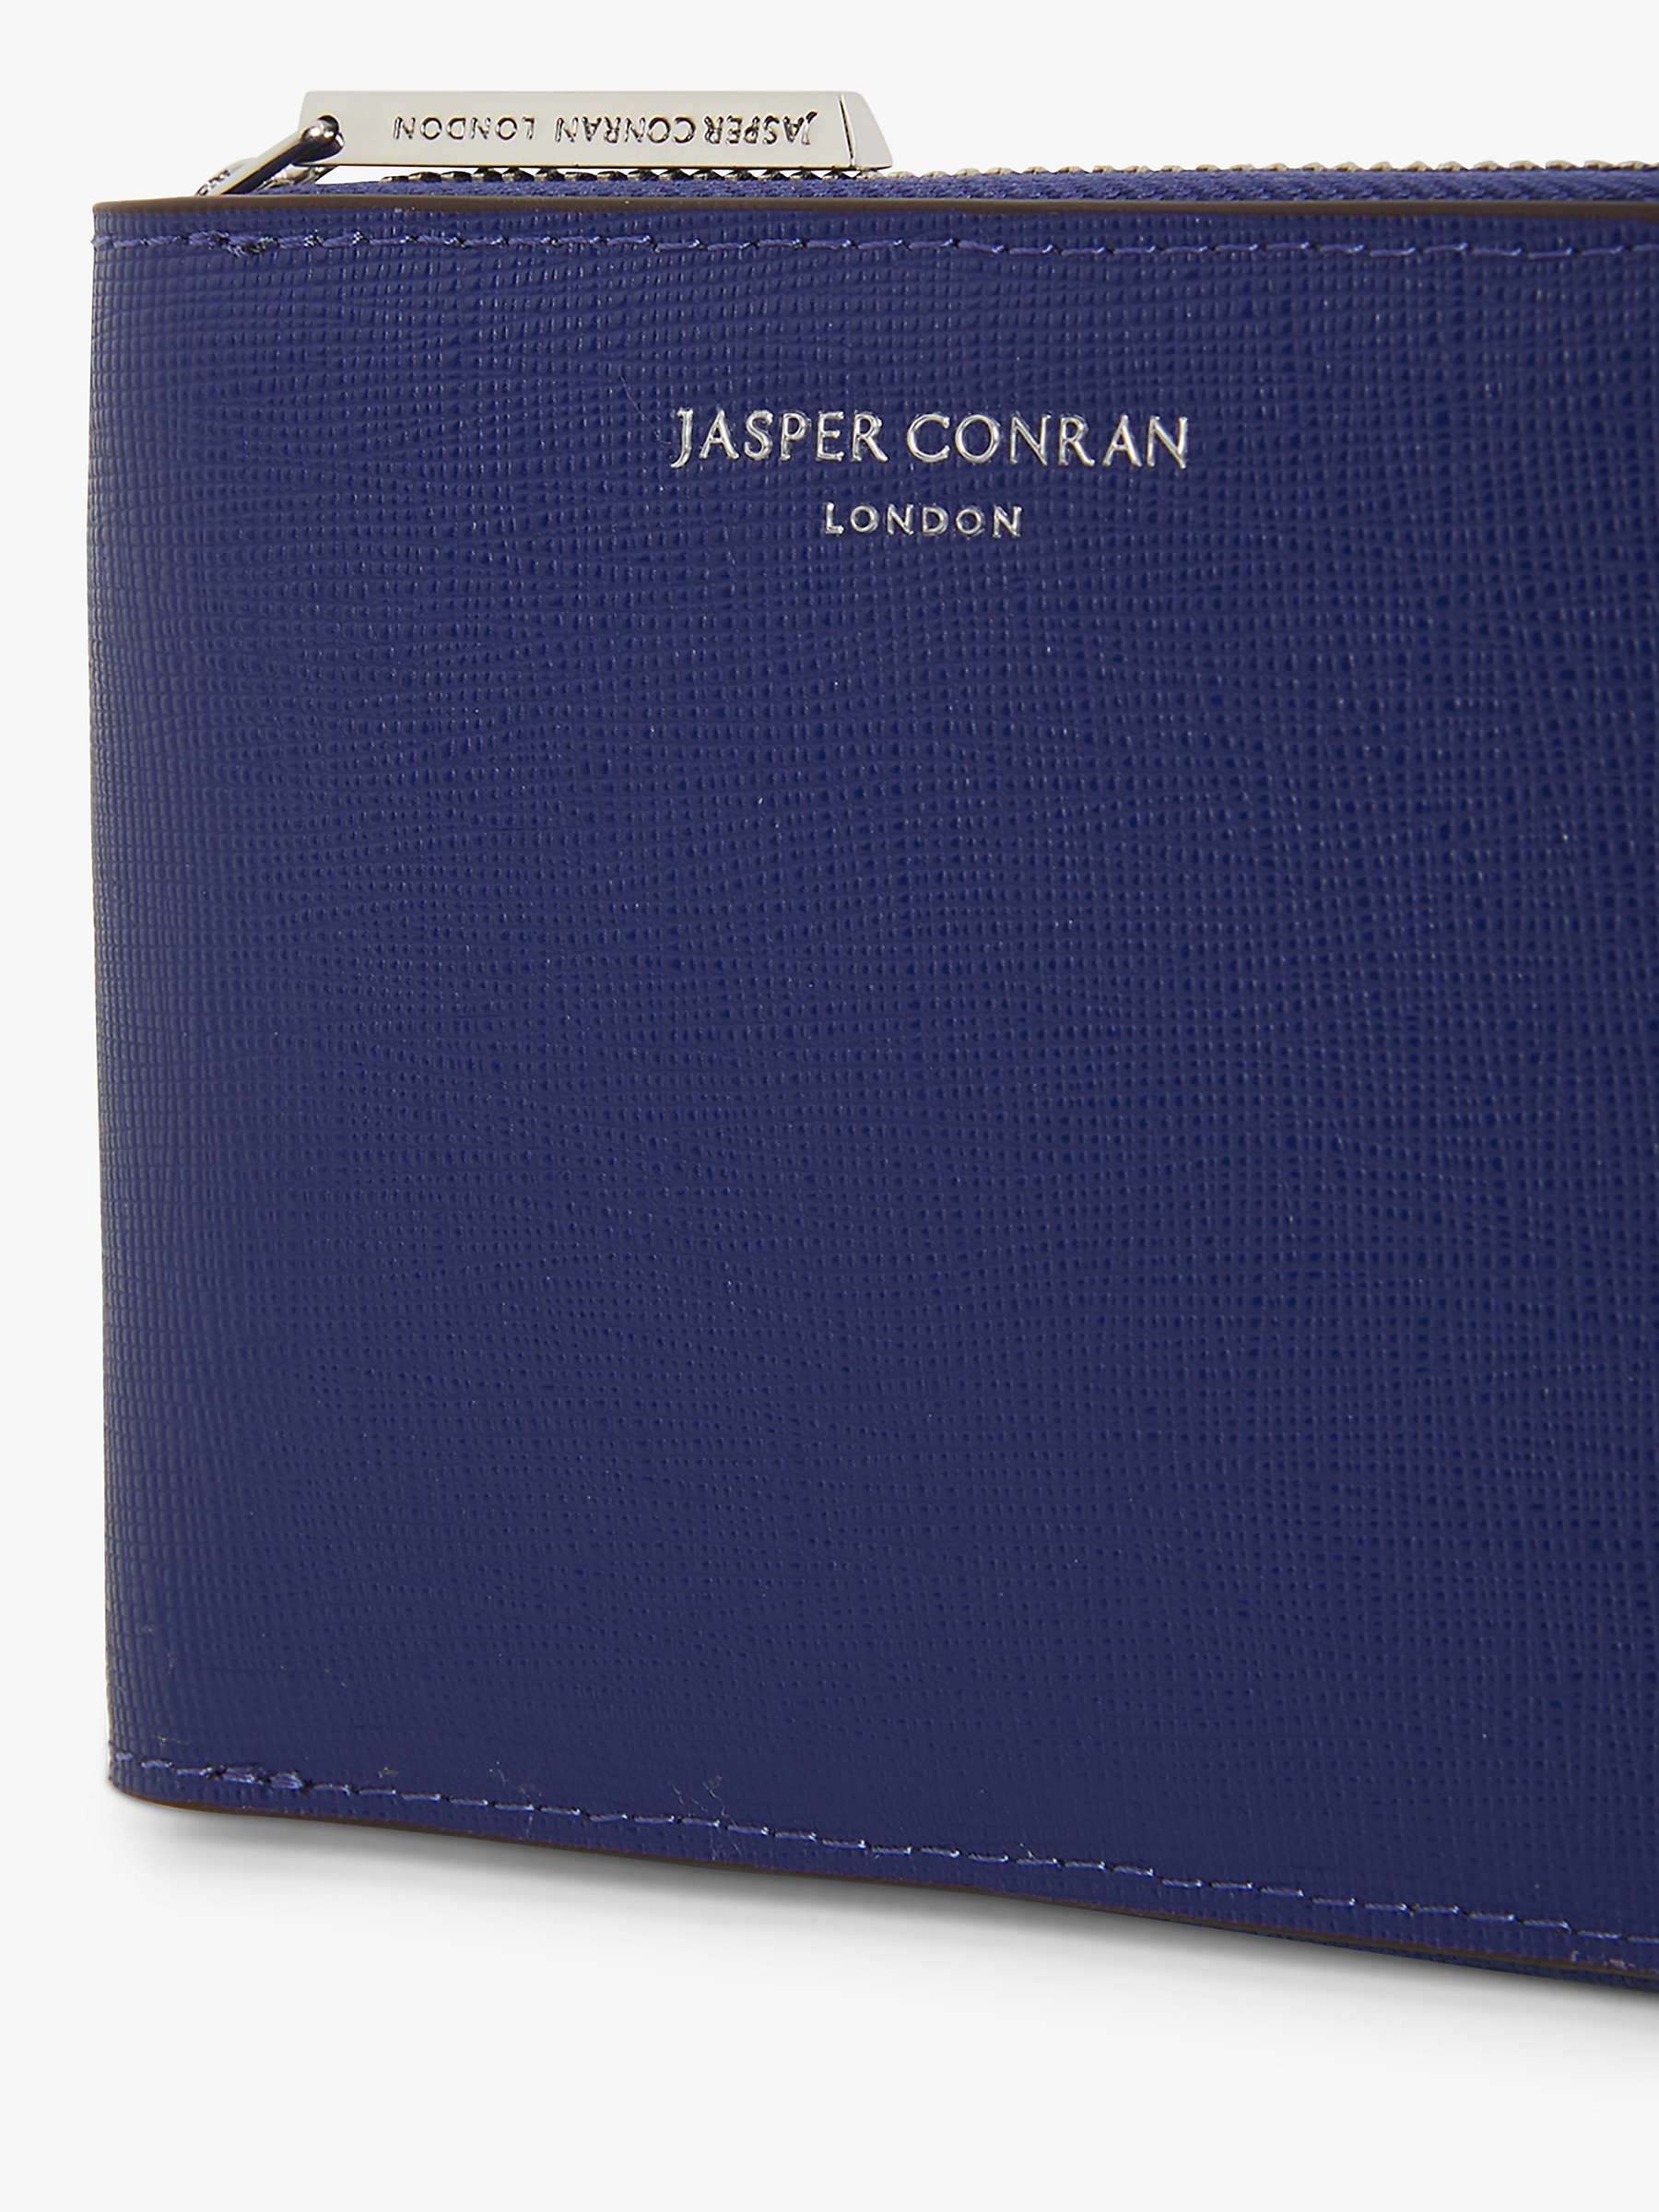 Buy Jasper Conran London Bee Small Cross Hatch Leather Purse Online at johnlewis.com